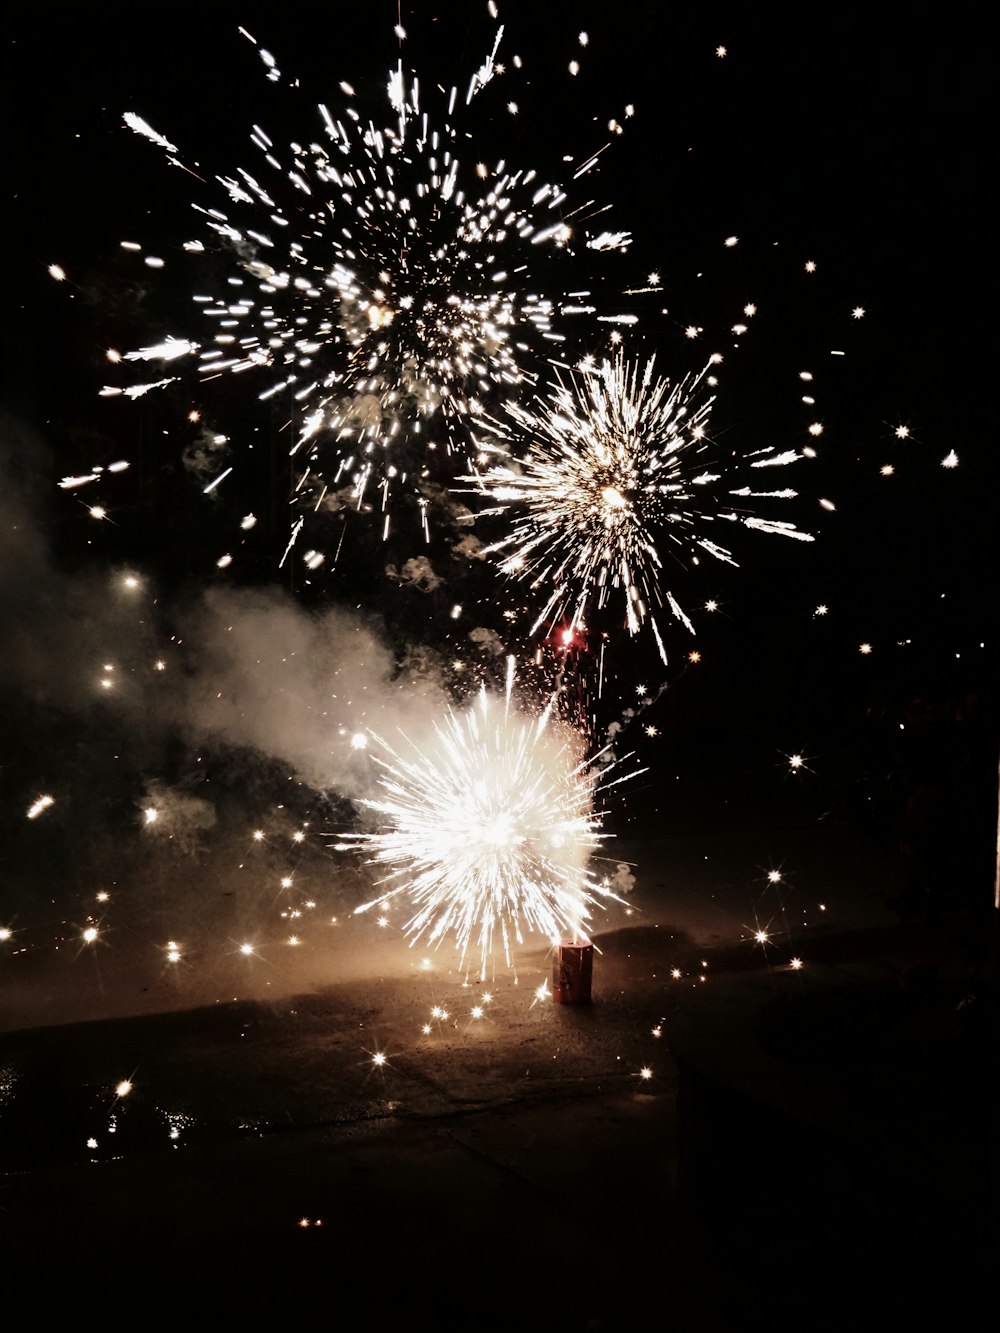 a firework display in the night sky